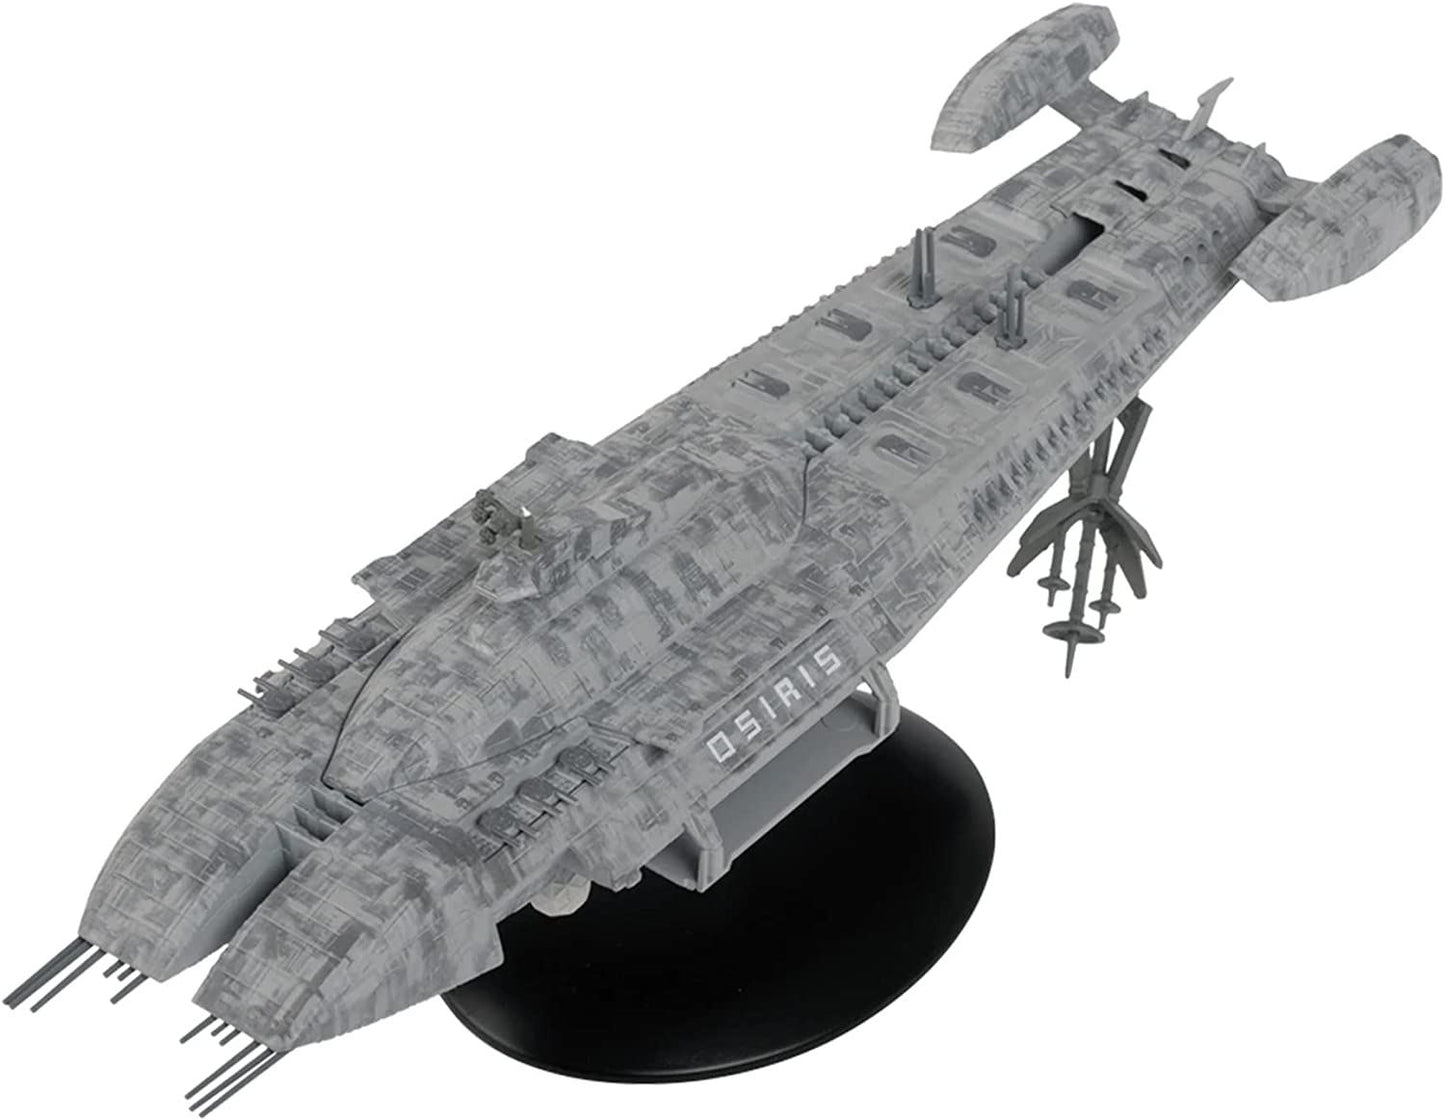 #22 Osiris (Blood & Chrome) Diecast Model Ship (Battlestar Galactica: The Official Ships Collection Eaglemoss)